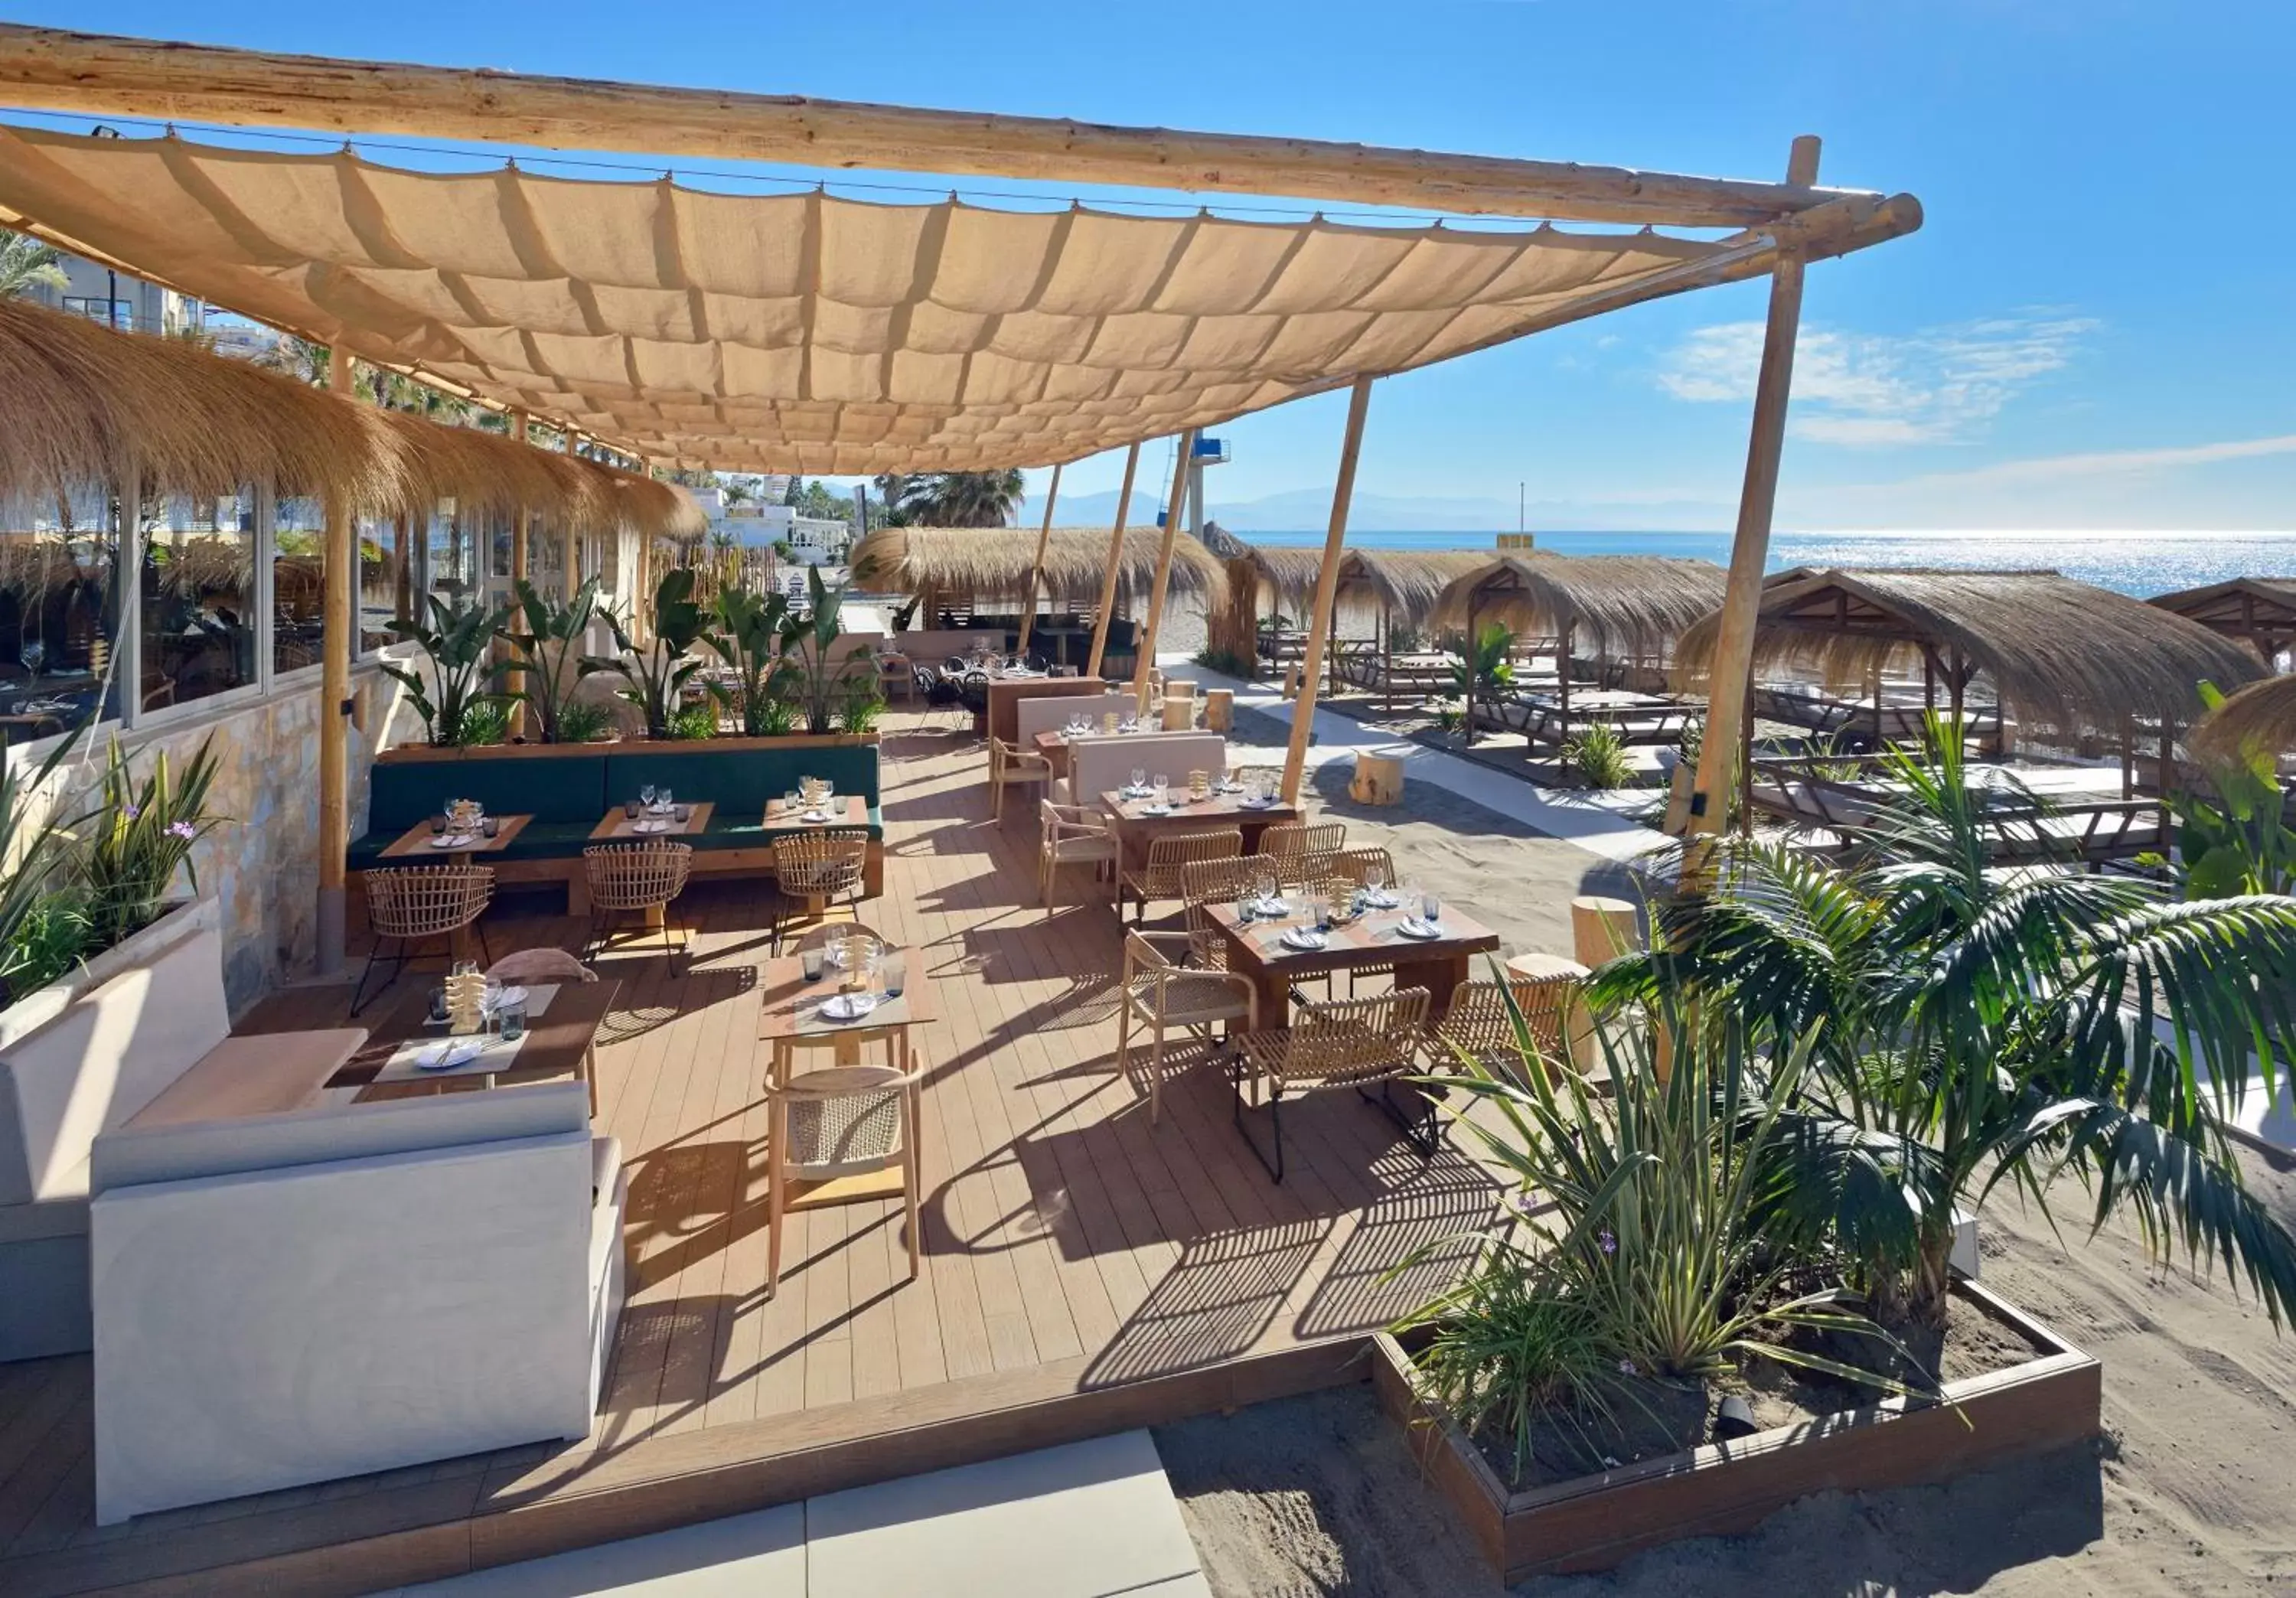 Restaurant/Places to Eat in Melia Costa del Sol